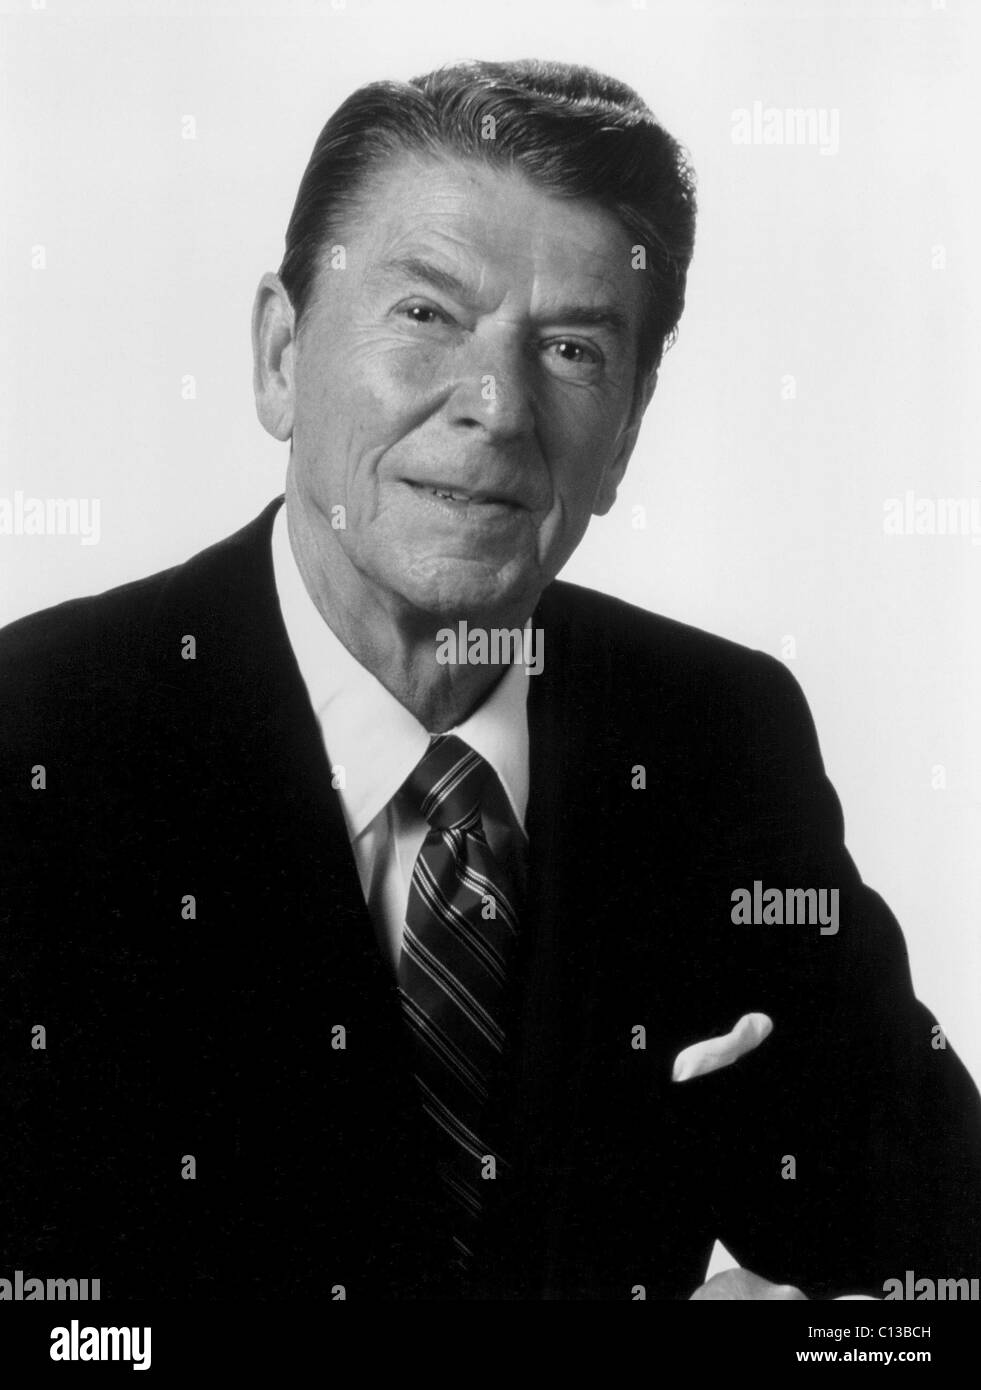 Ronald Reagan, portrait as President, c. 1982 Stock Photo